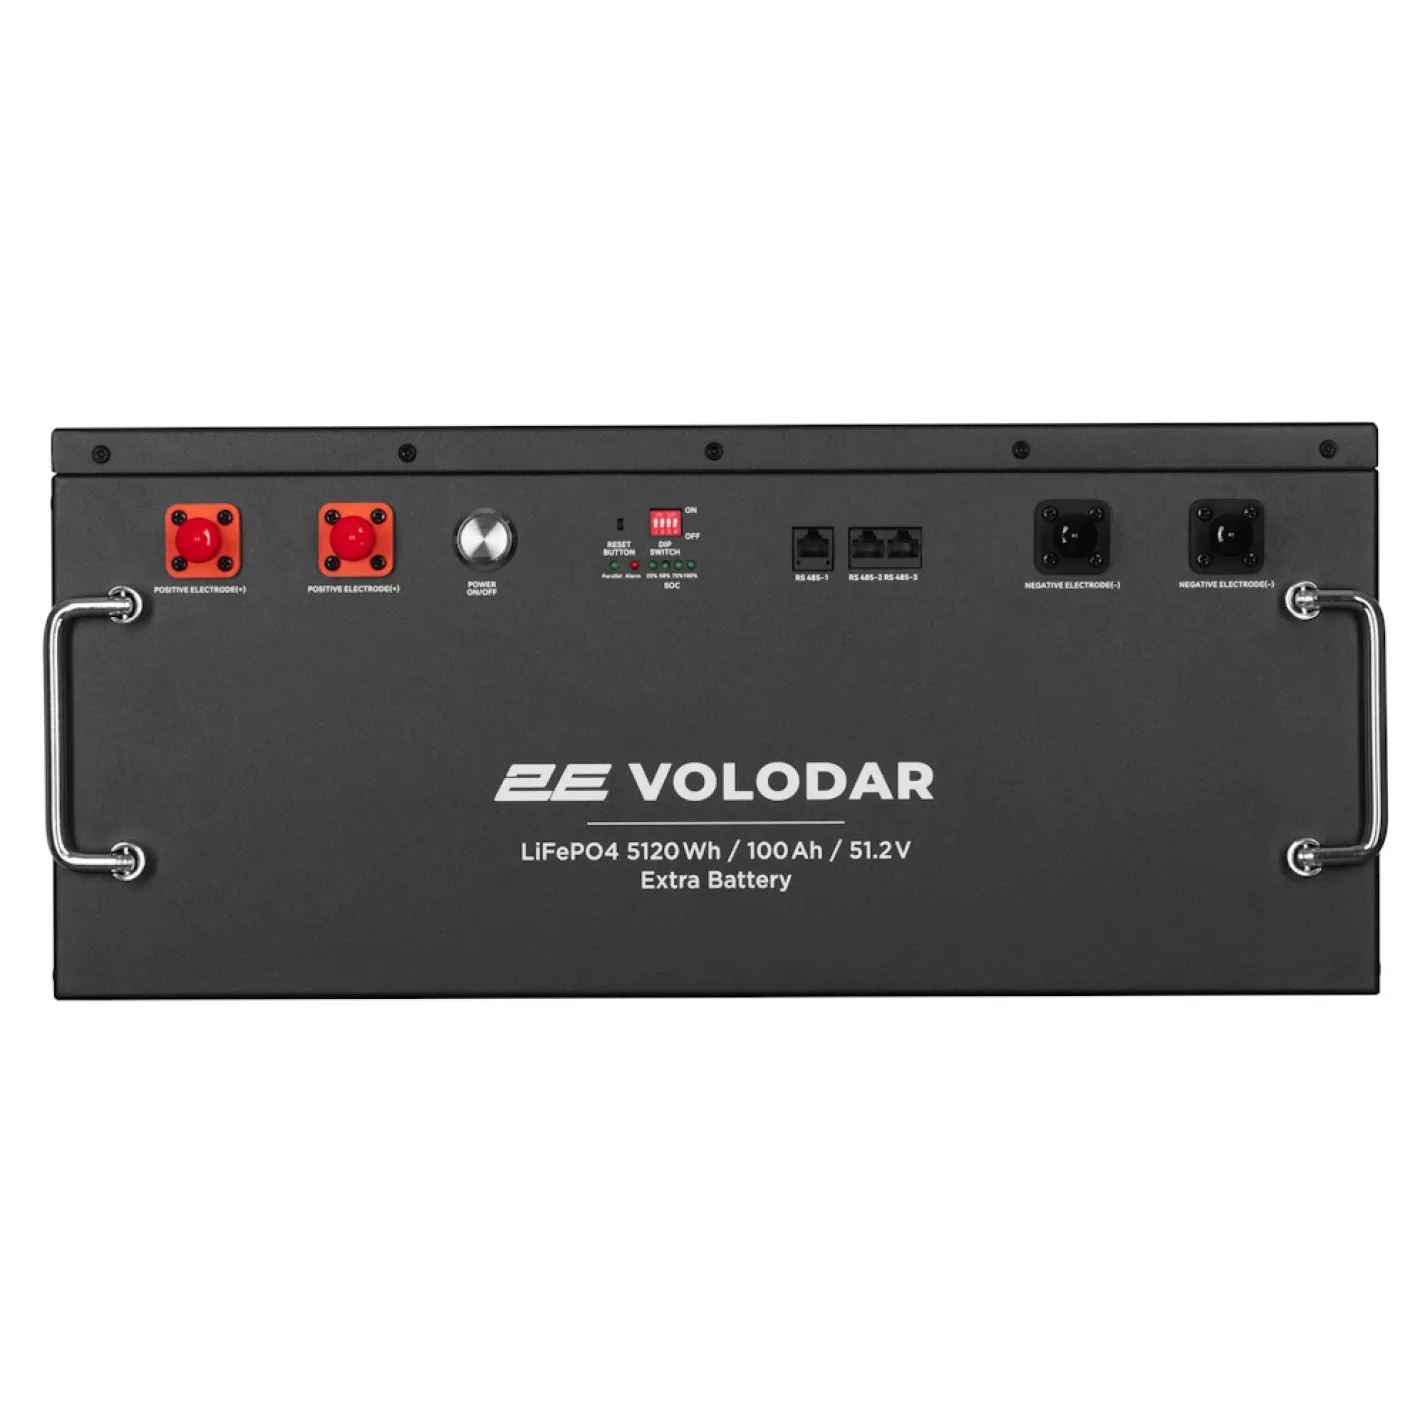 Батарея расширения емкости 2E для ПЭ Volodar 5120 Вт/ч (2E-PPSEB51) - Фото 1